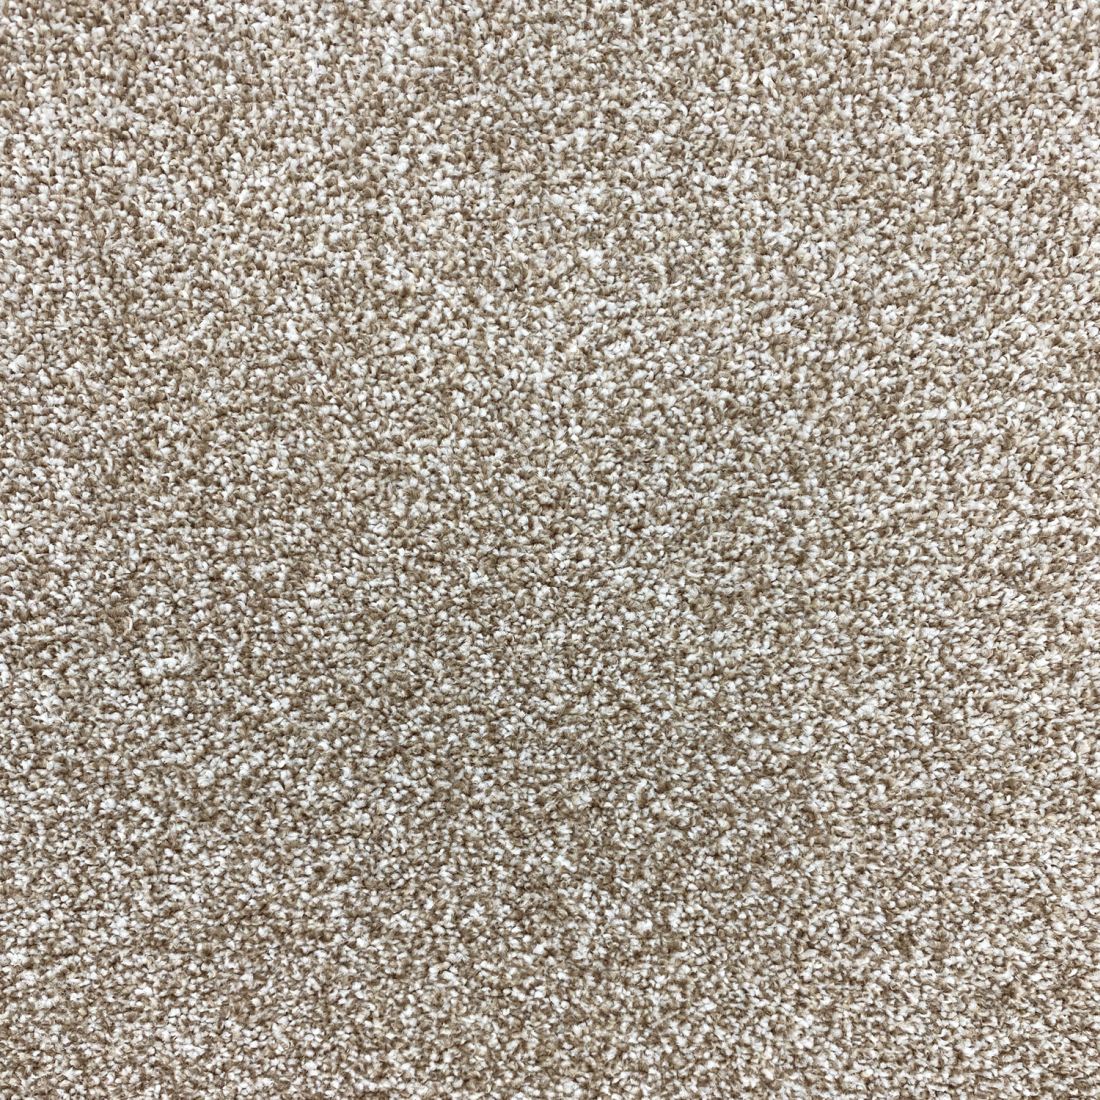 Invincible Rustic Stain Resistant Twist Carpet - Moonlight